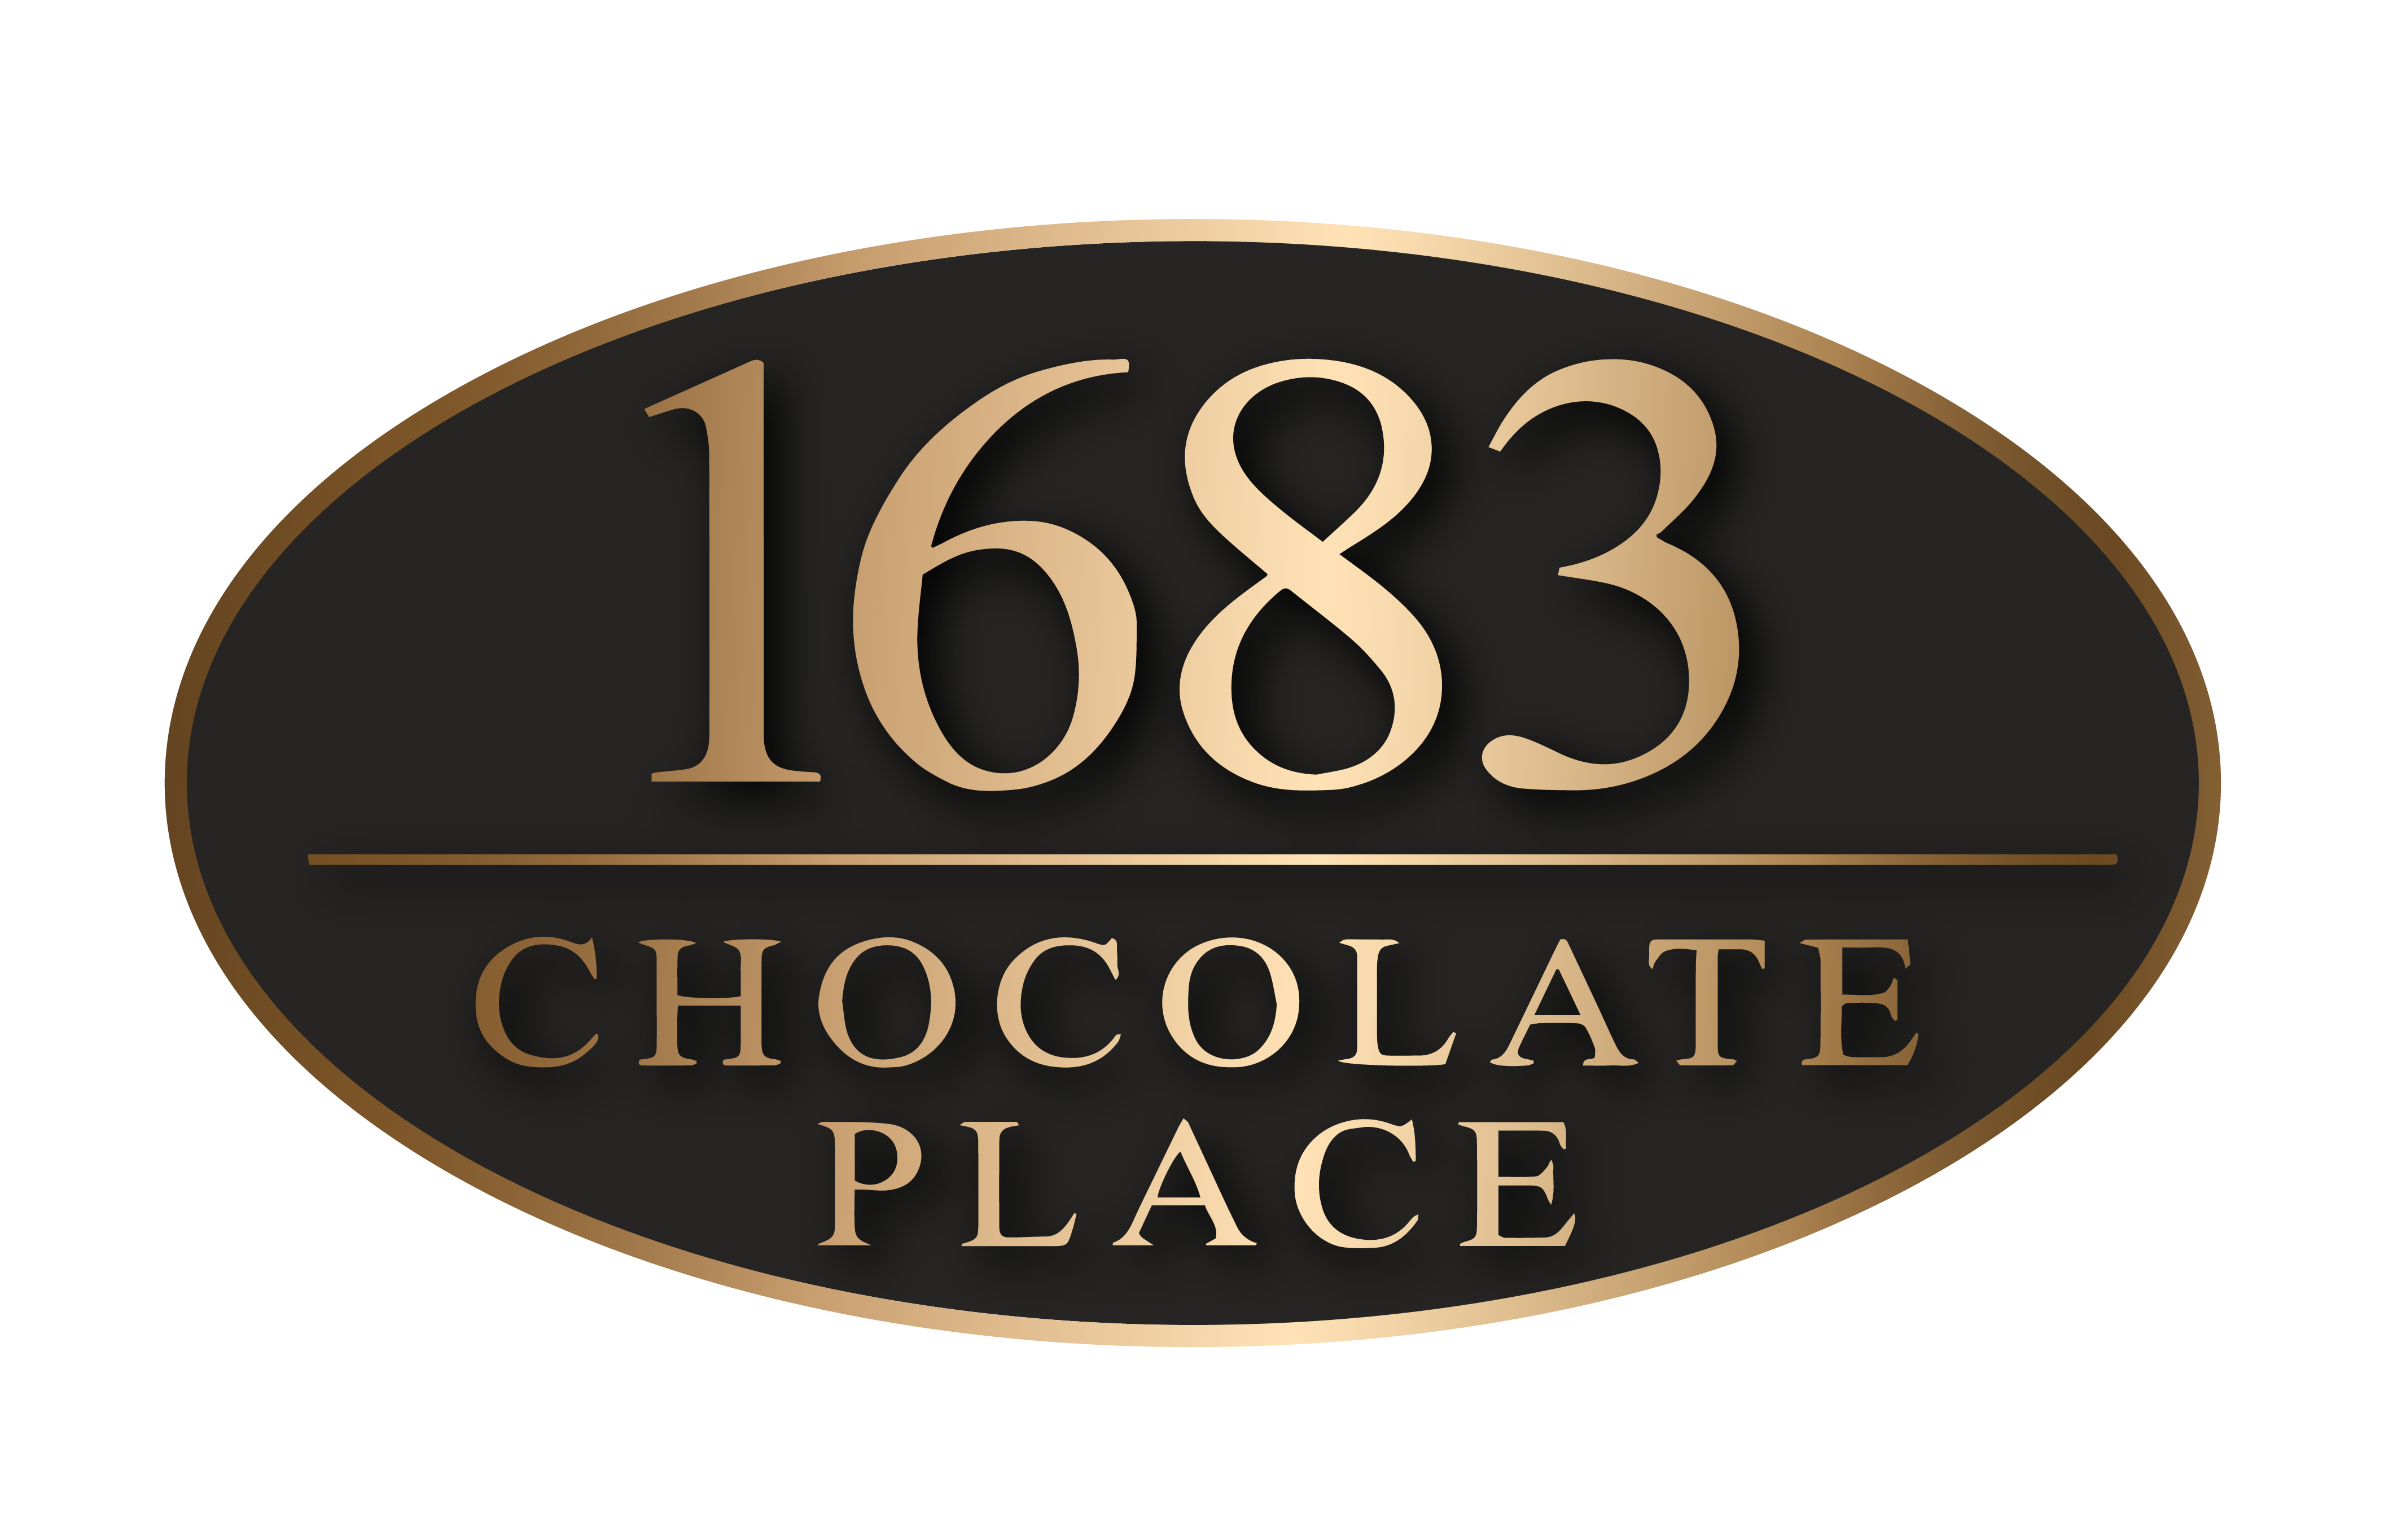 1683 Chocolate Place